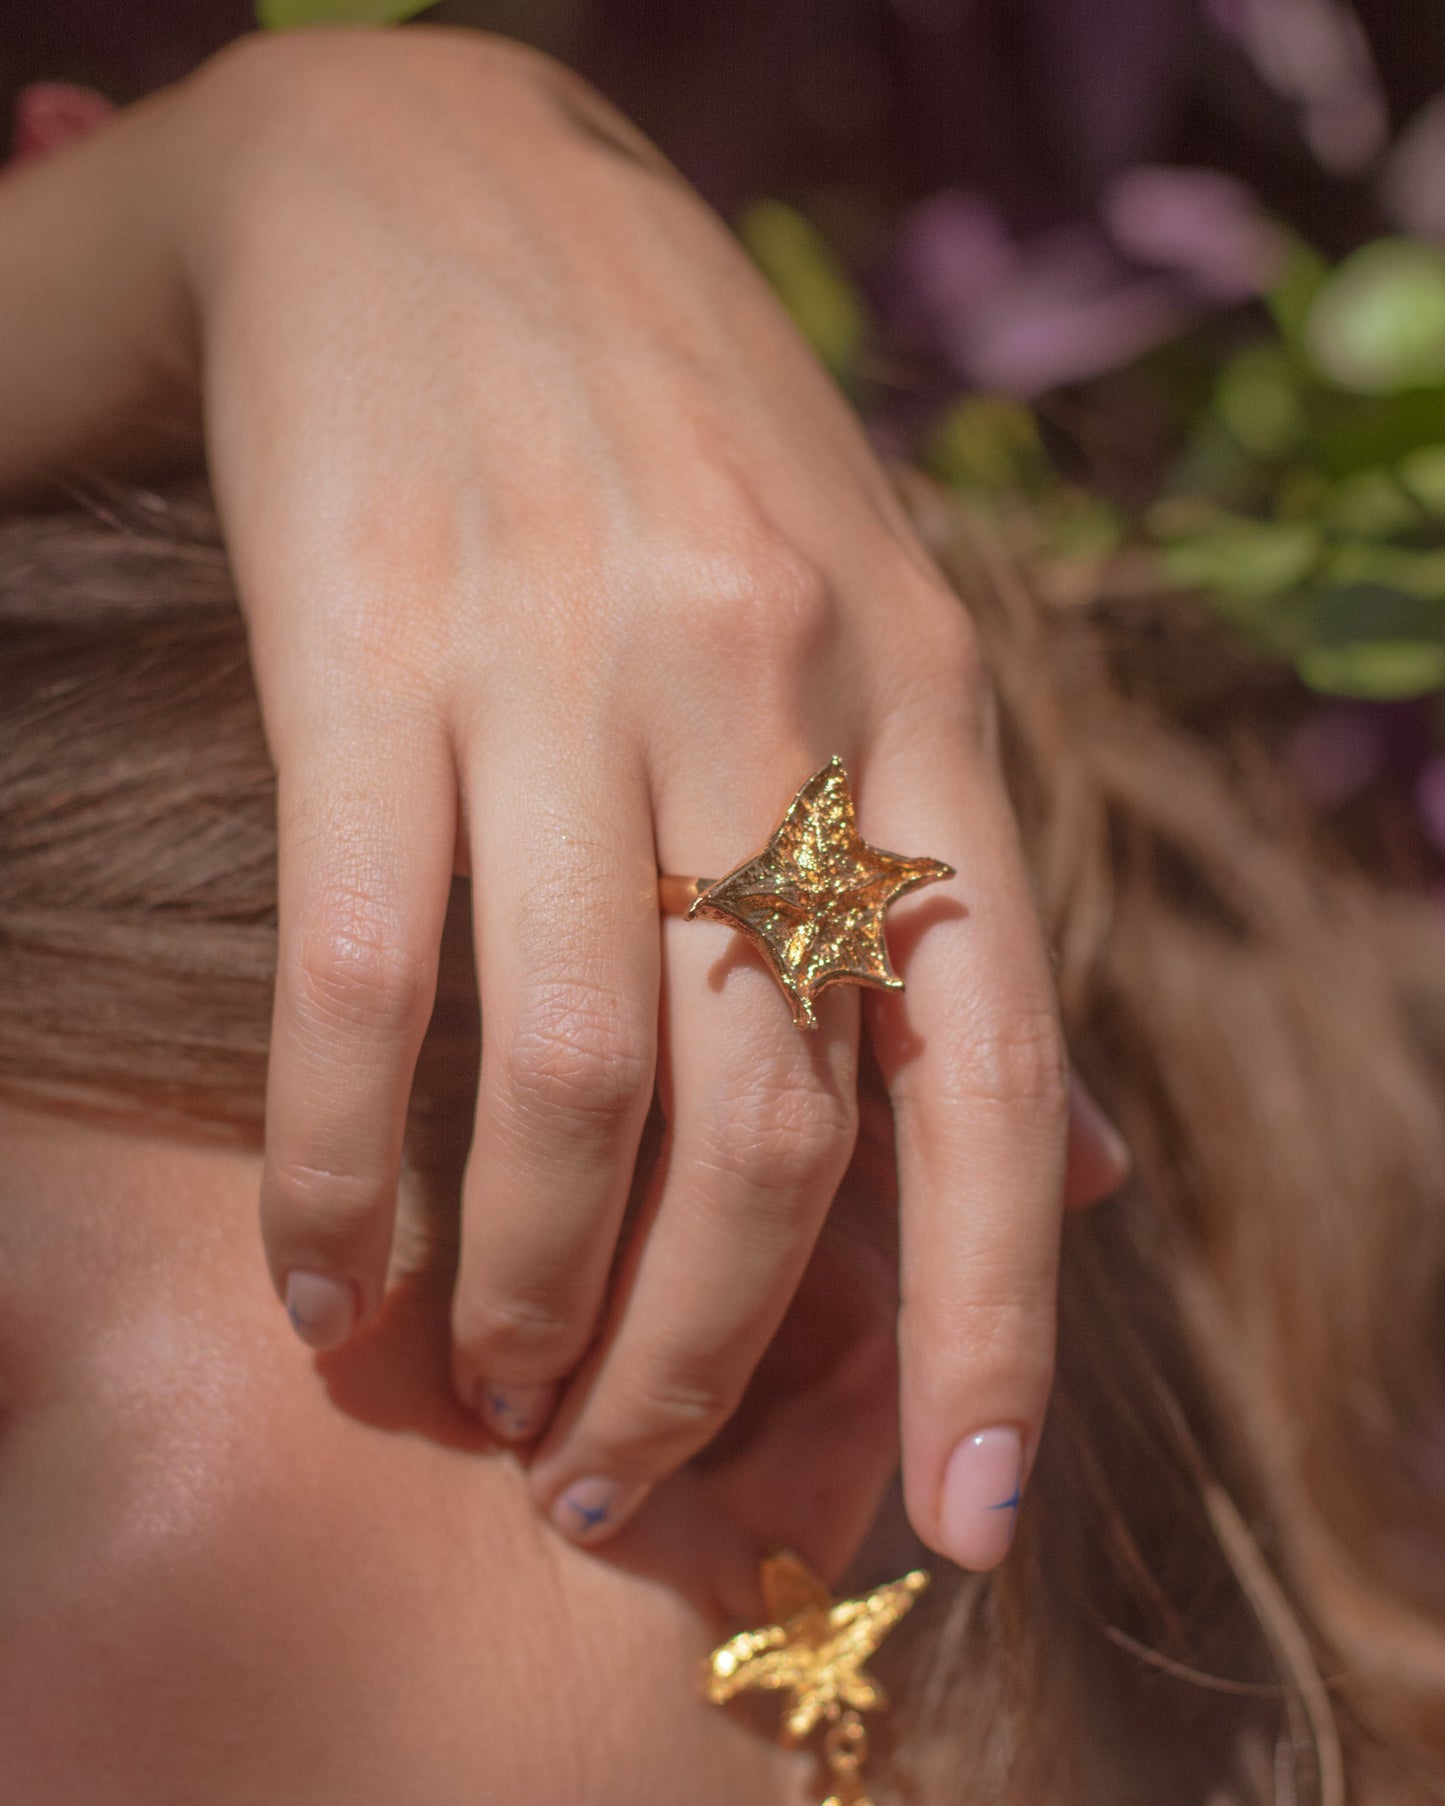 anillo-artesanal-estrella-carambolo-enchapado-en-oro-24-kilates-diseño-único-naturaleza-inmortalizada-joyería-sostenible